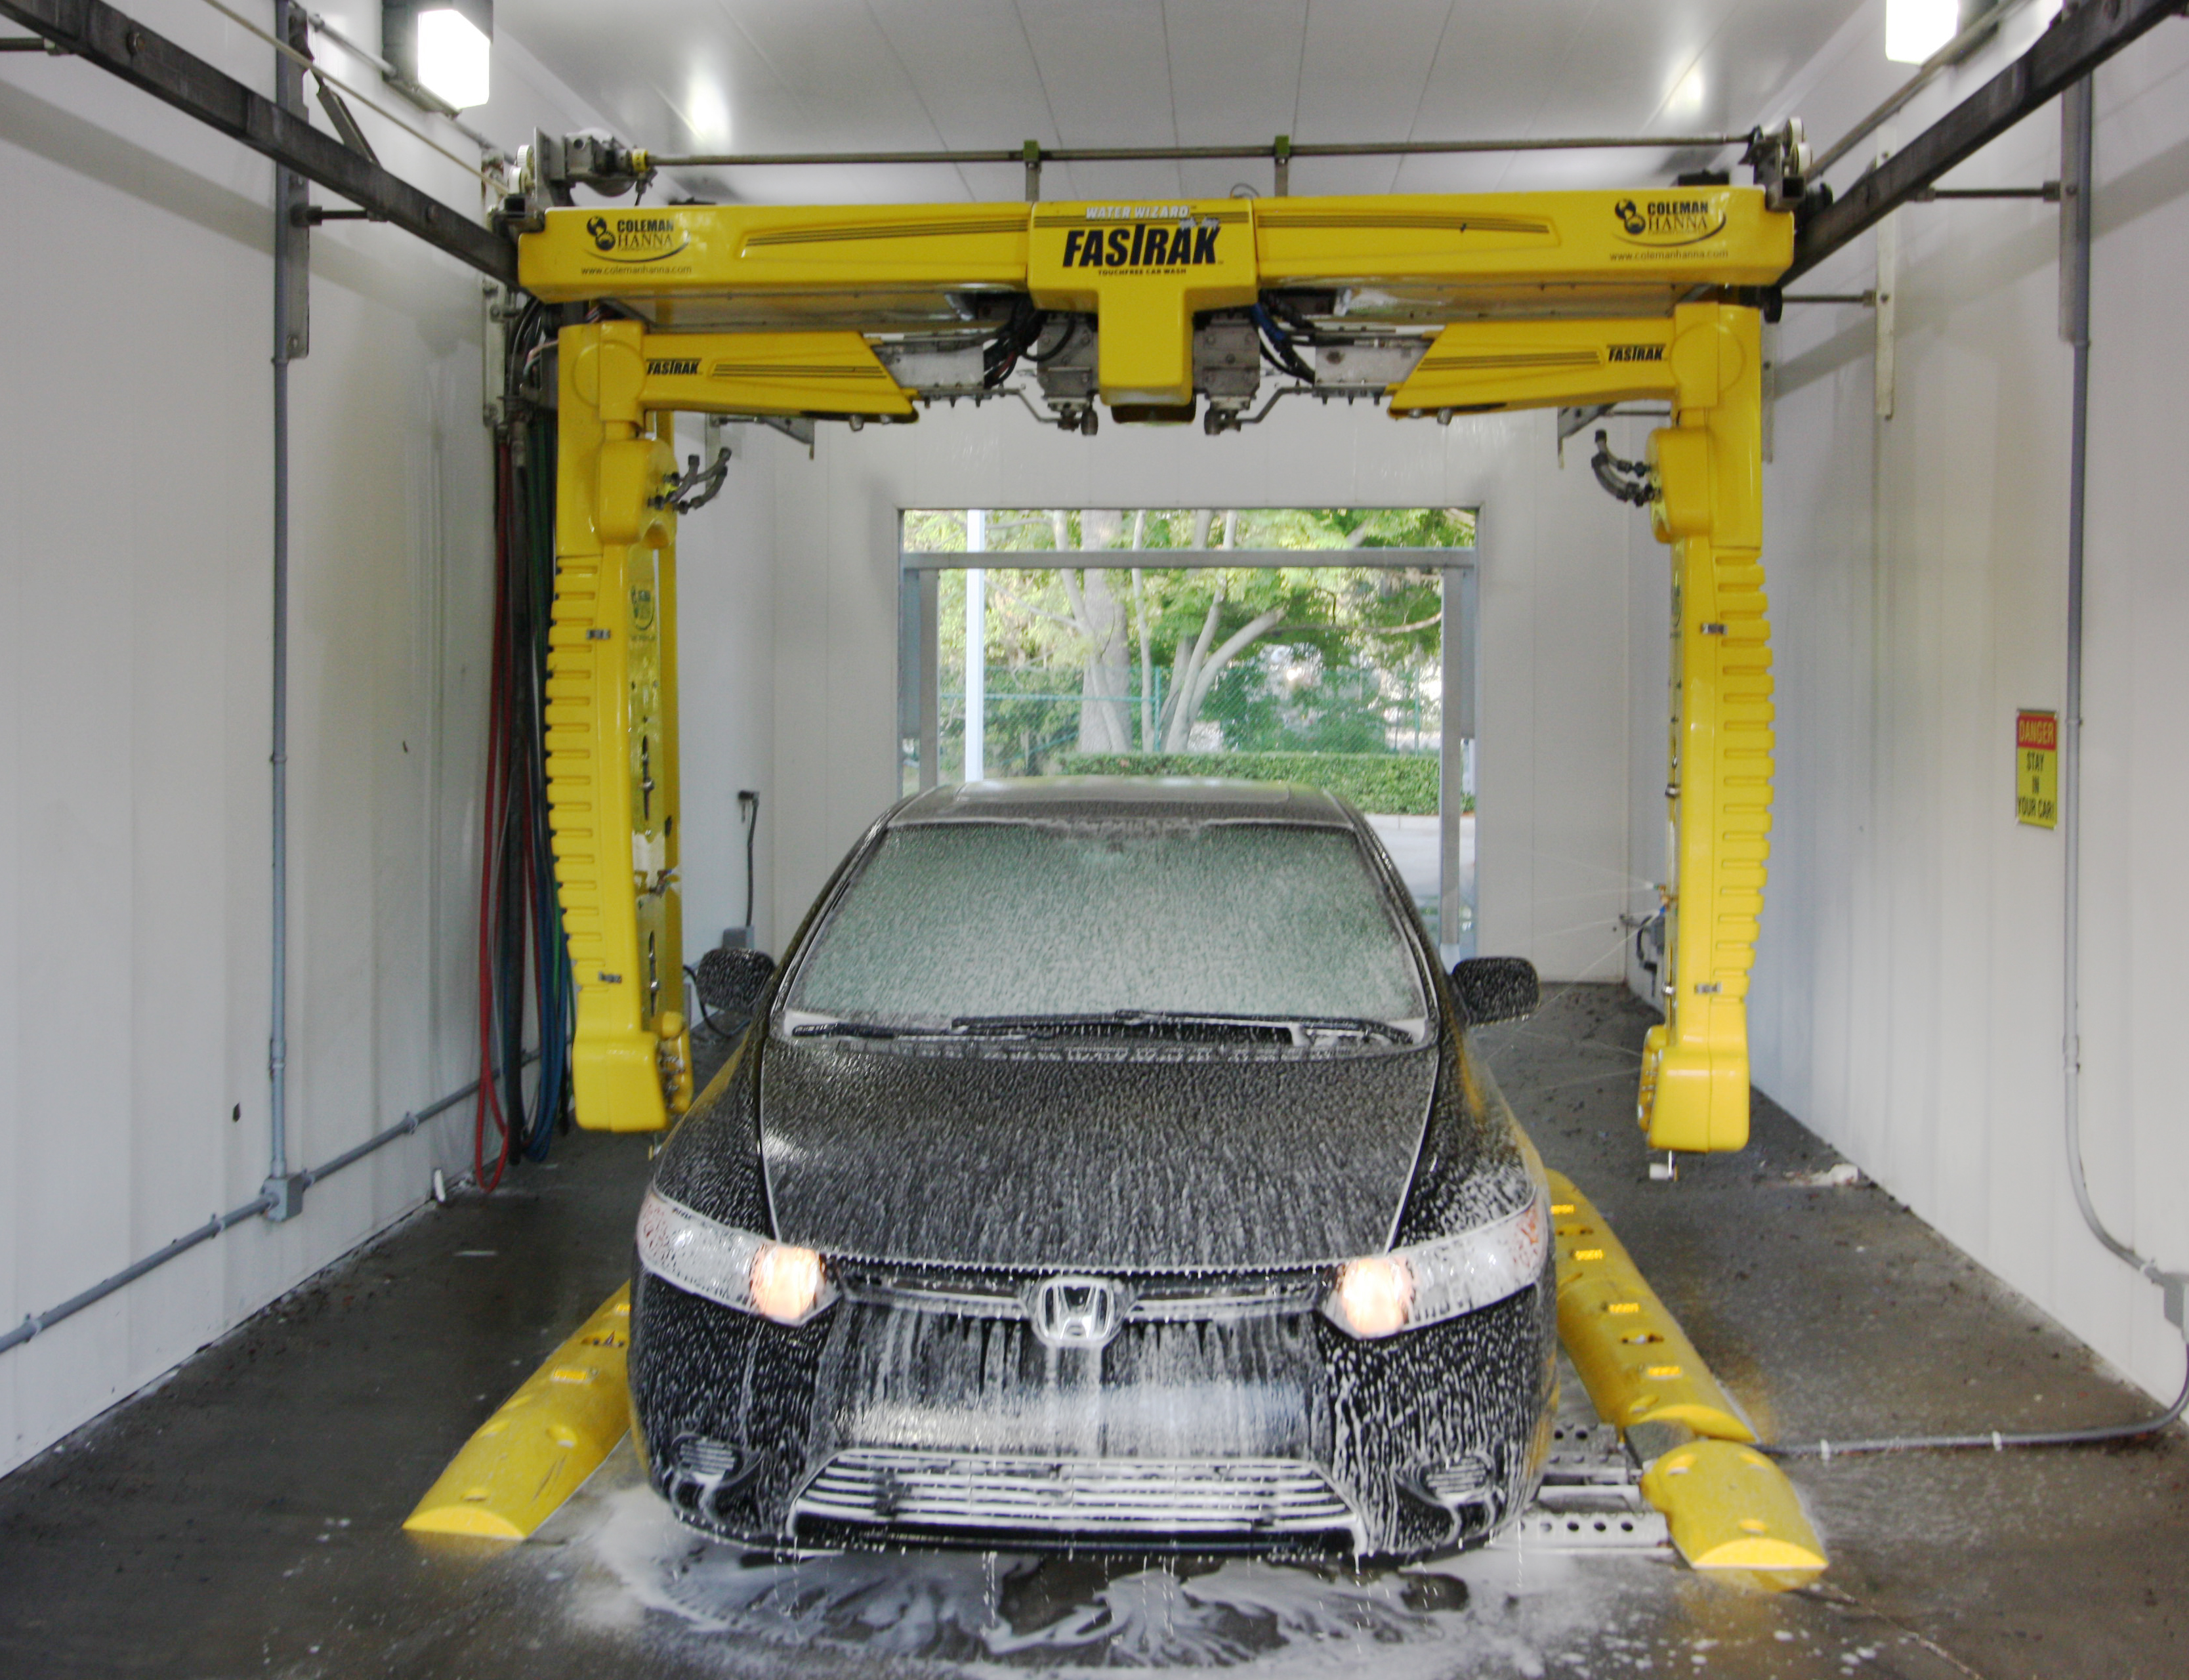 Car Wash Machine, Touchless Car Wash Equipment, Automatic Car Wash Machine, TouchFree Car Wash Machine